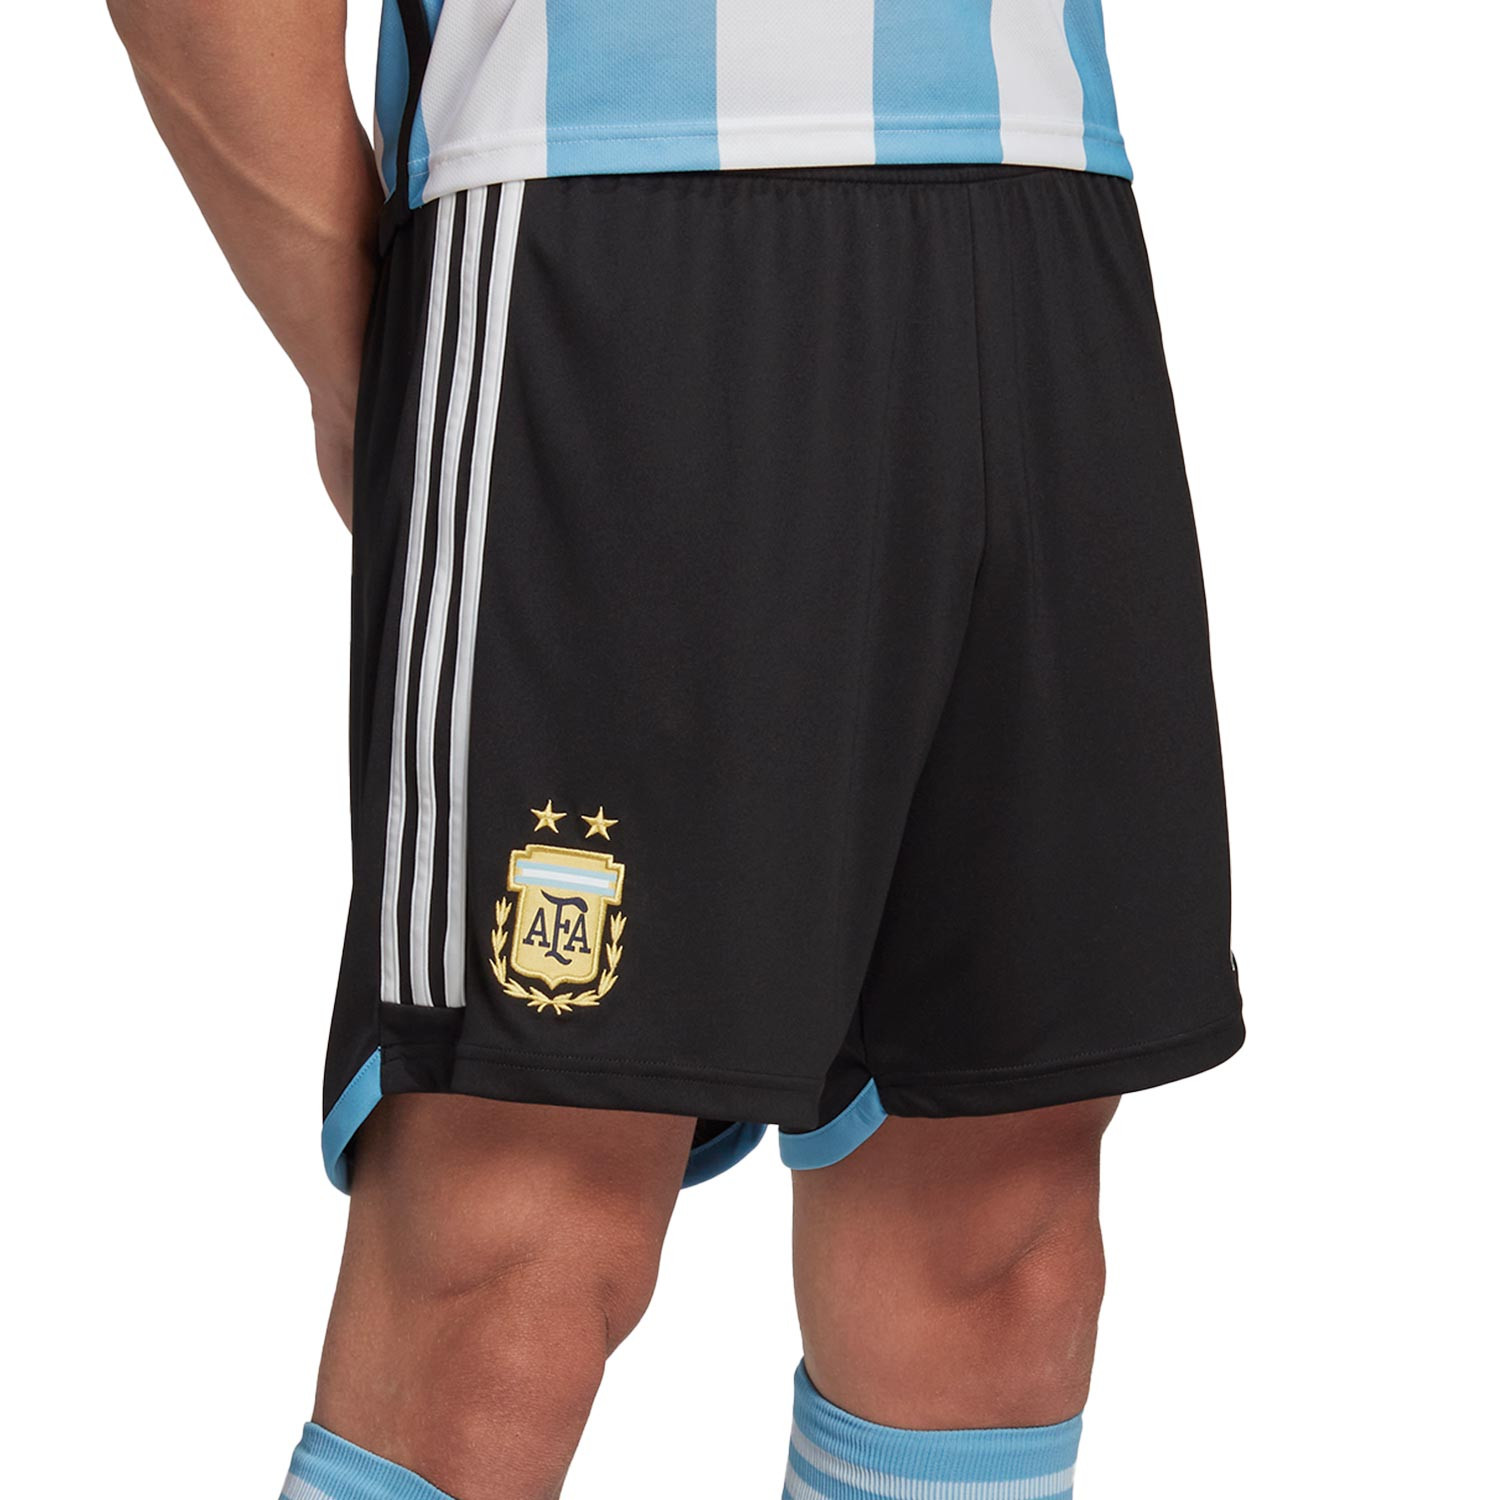 Short Adidas Argentina 2022 2023 vlr.eng.br